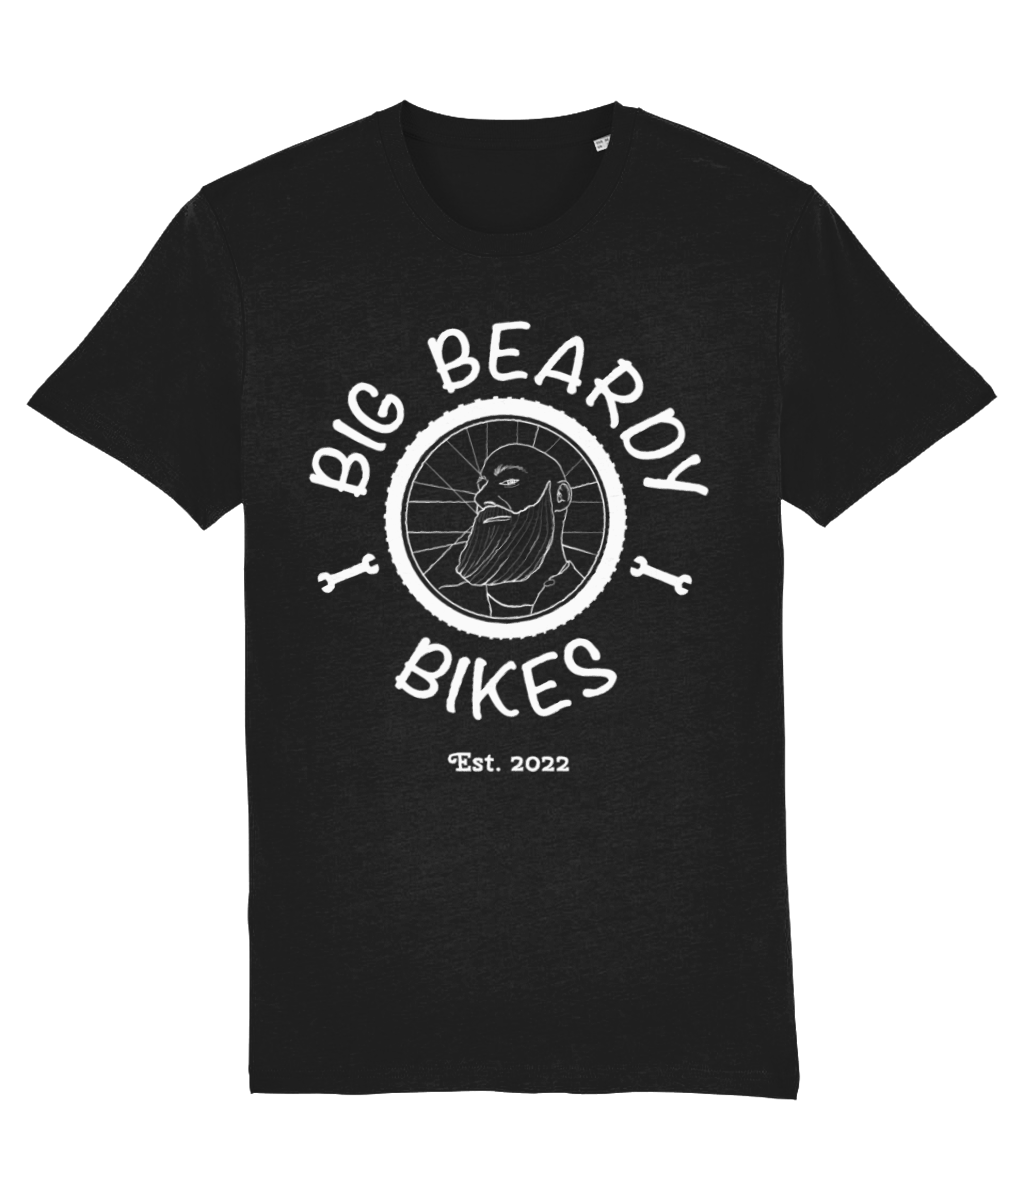 Big beardy bikes tee shirt black white logo